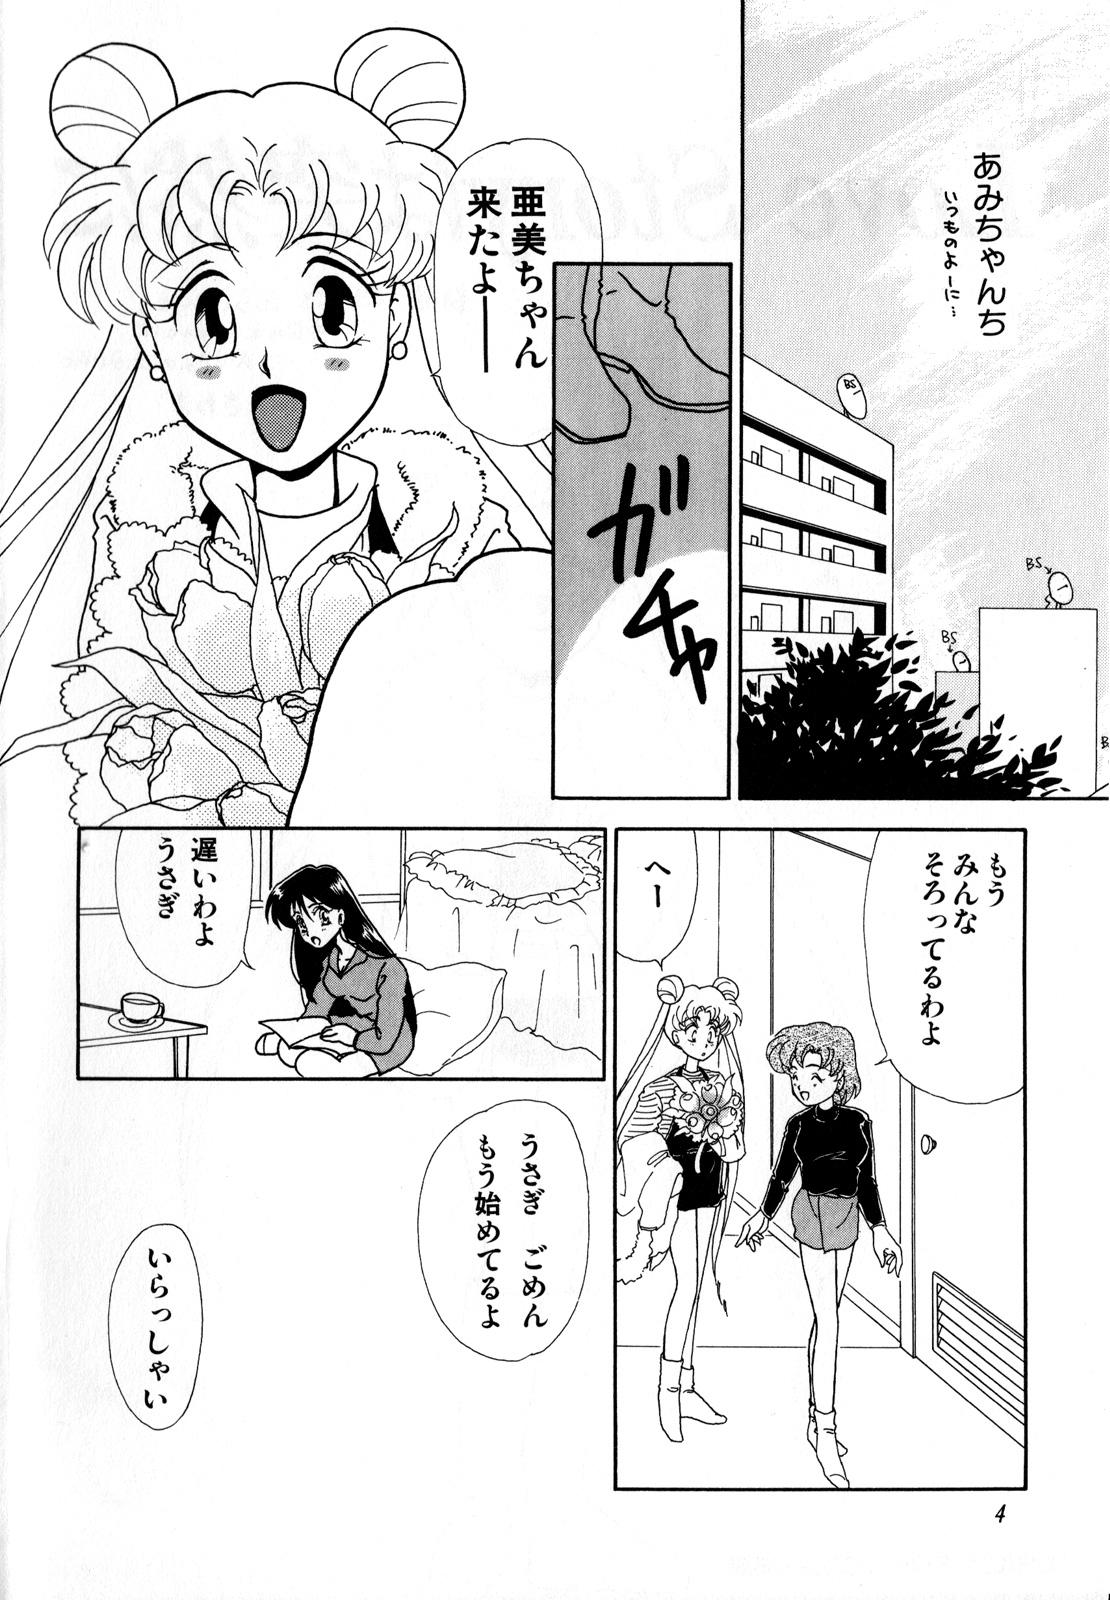 Funk Lunatic Party 3 - Sailor moon Spy - Page 5